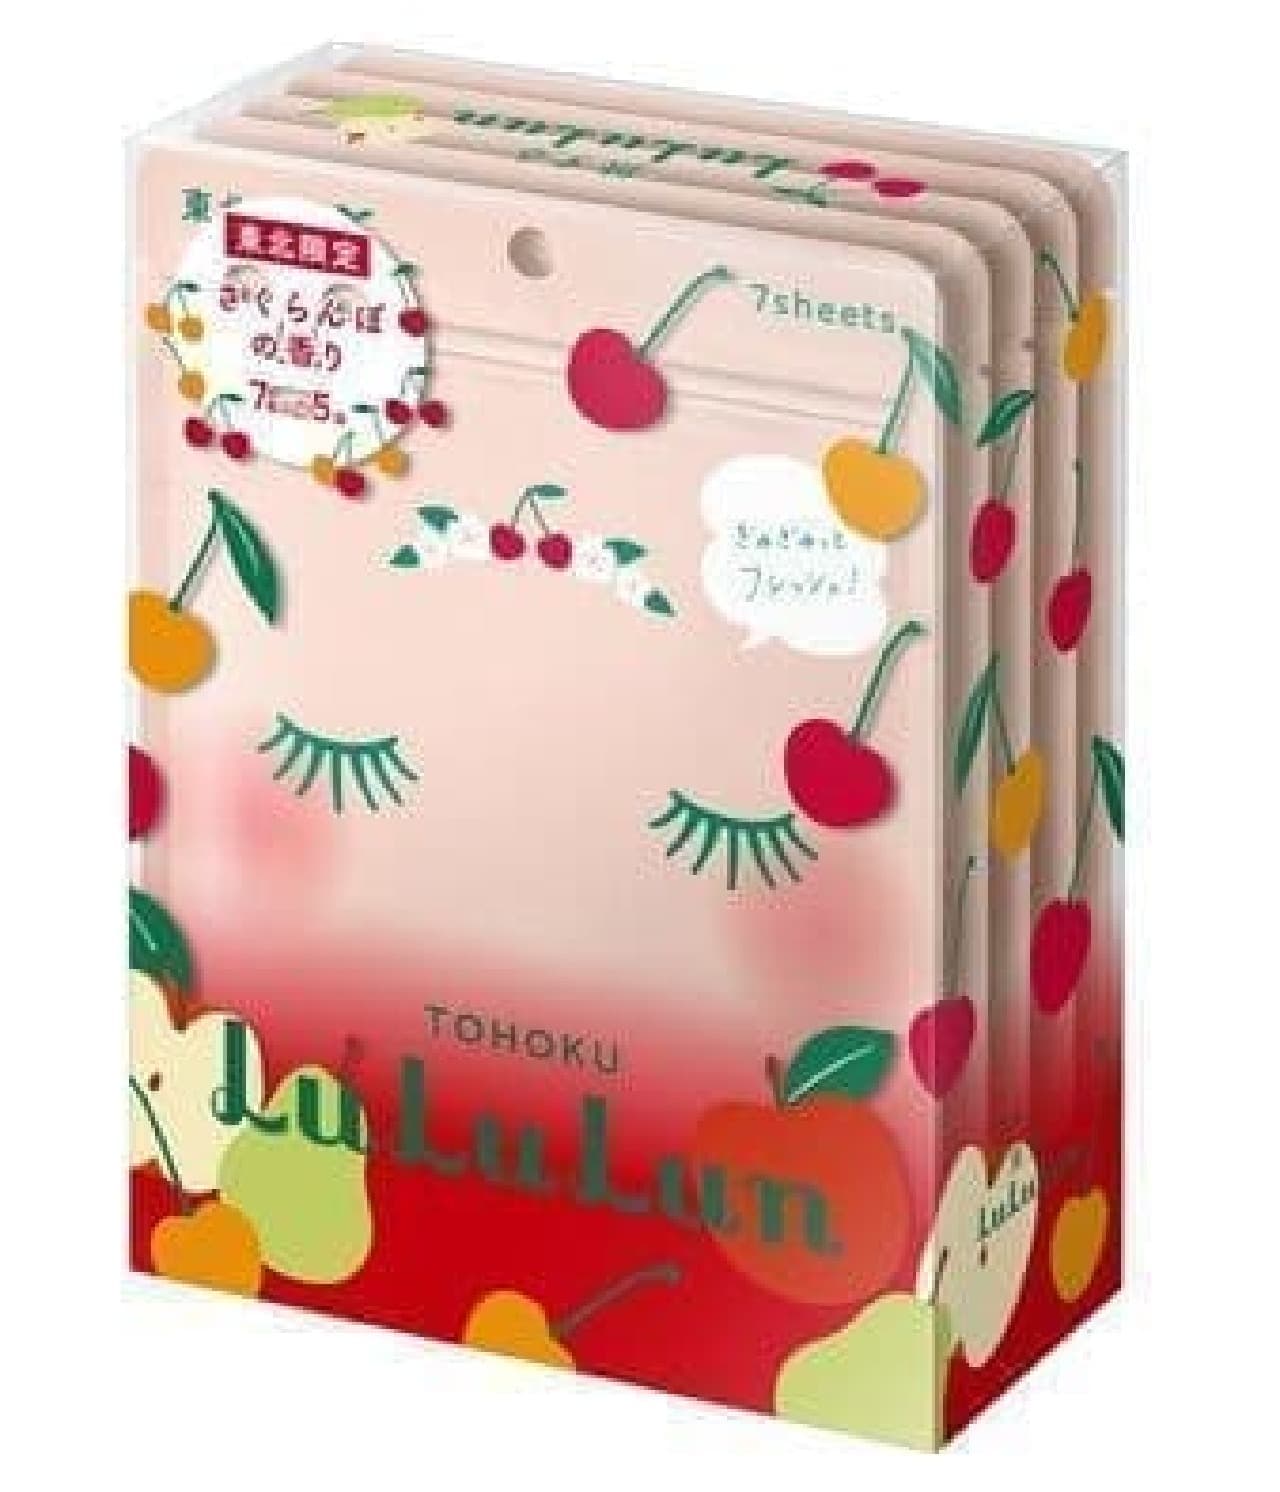 Regional limited face mask "Tohoku Lulurun (cherry scent)"